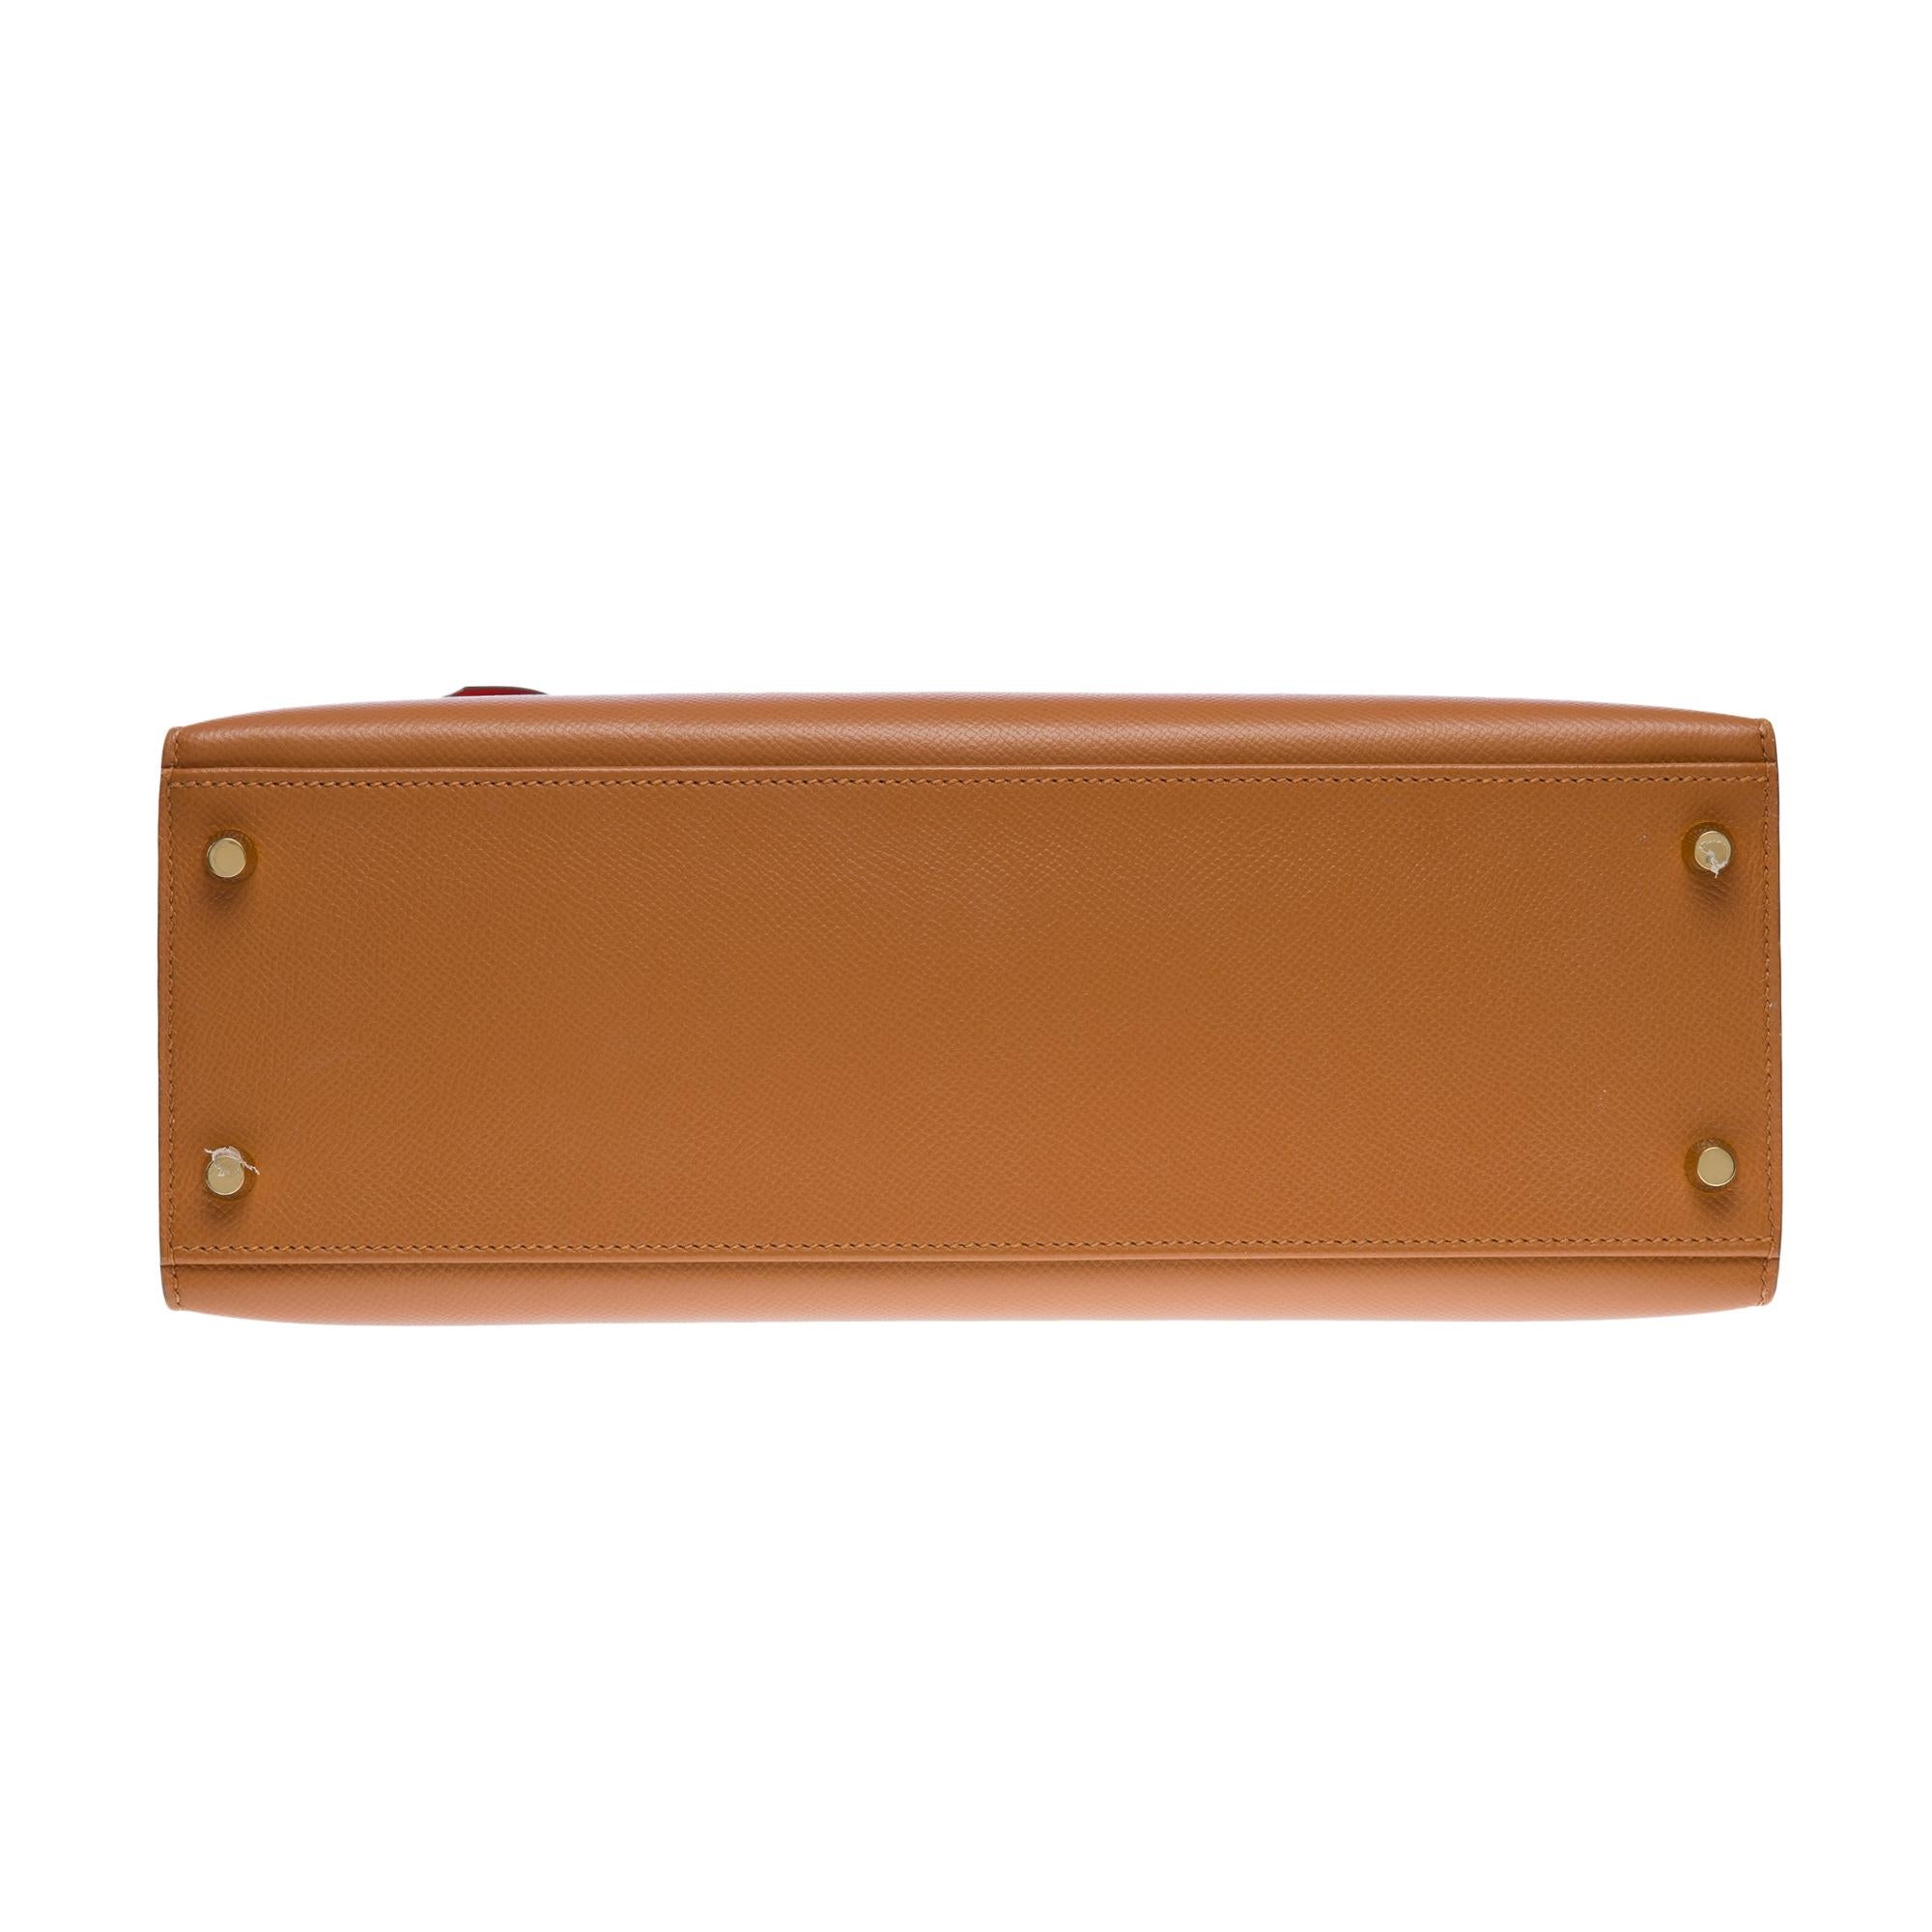 Hermès Kelly 32 sellier handbag strap (HSO) in Camel & Orange Epsom leather, GHW For Sale 7